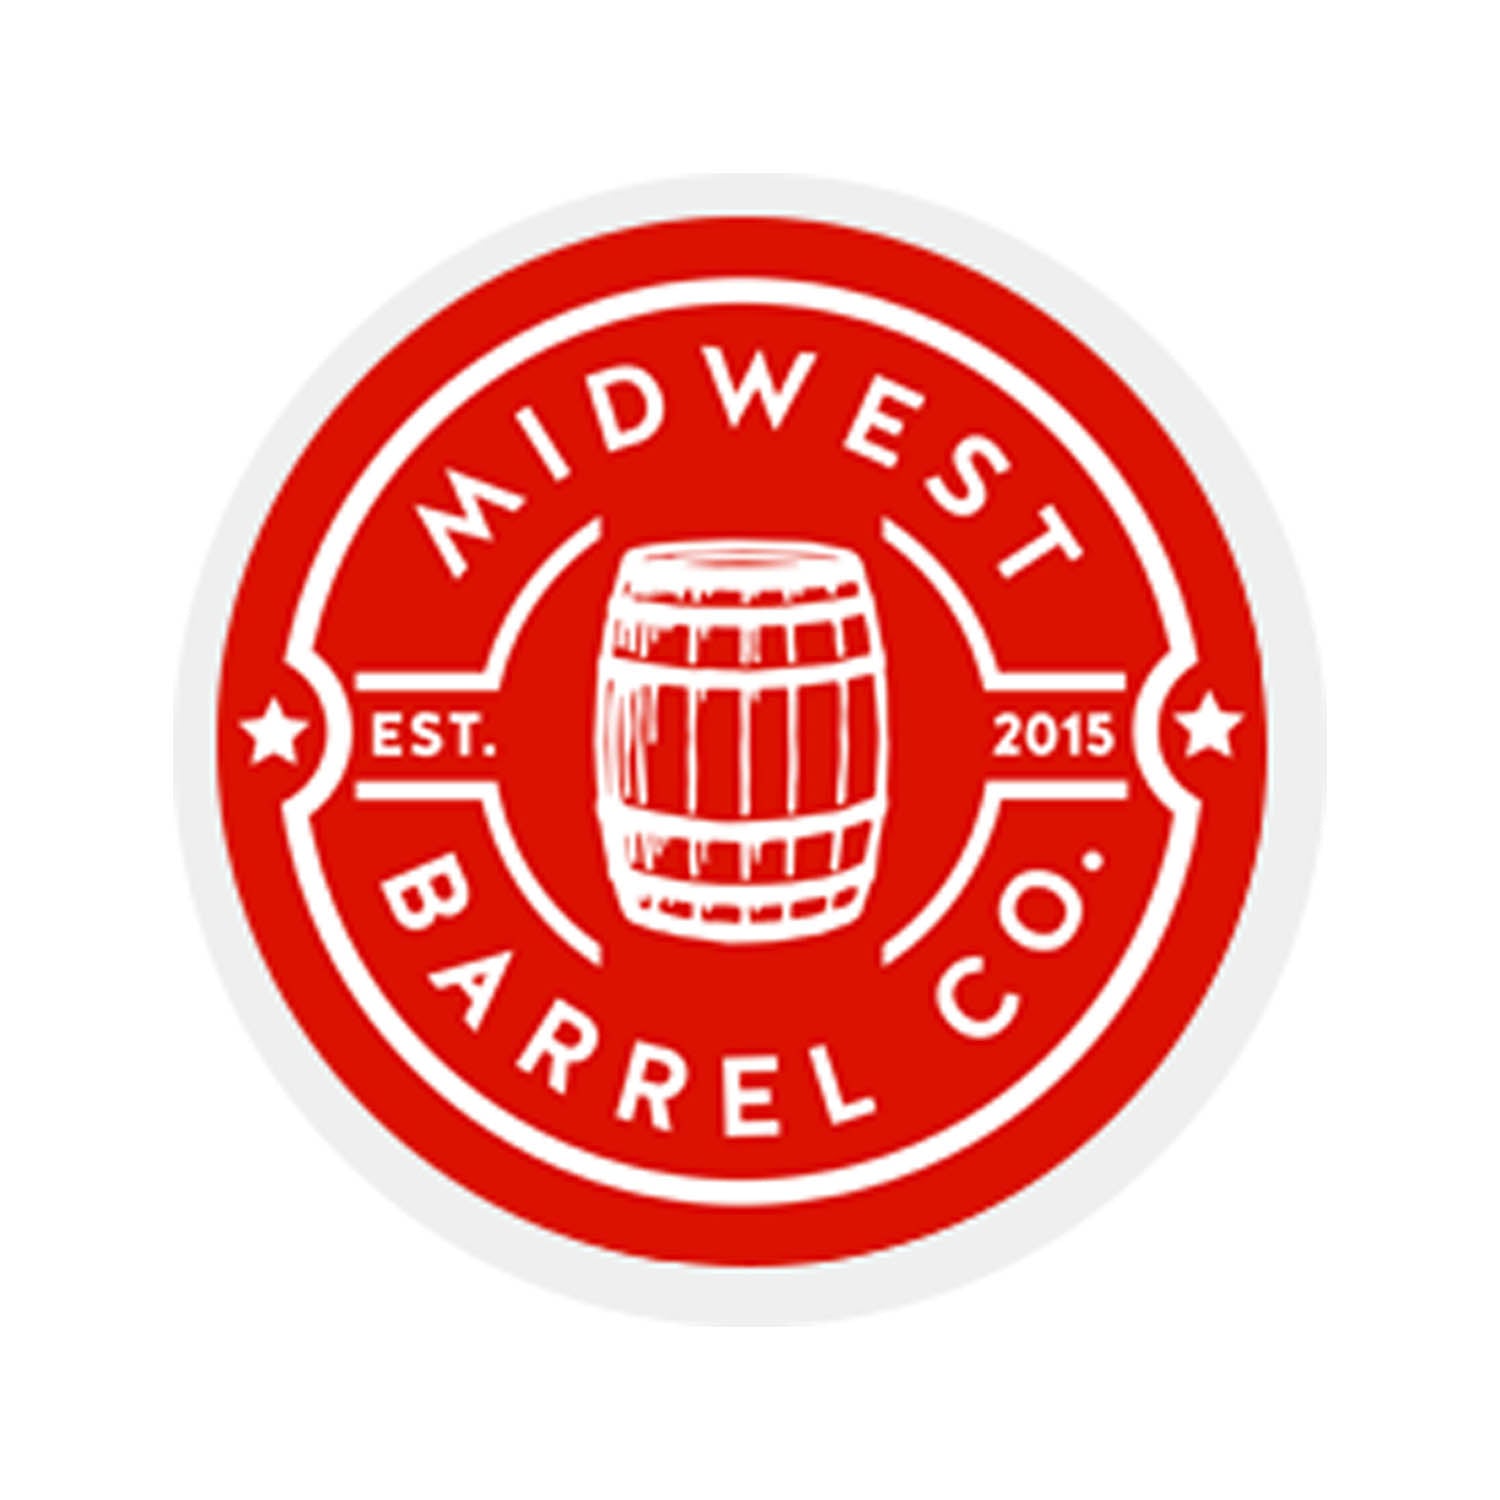 Midwest Barrel Company Genuine Scotch Barrel BBQ Smoking Wood Chips